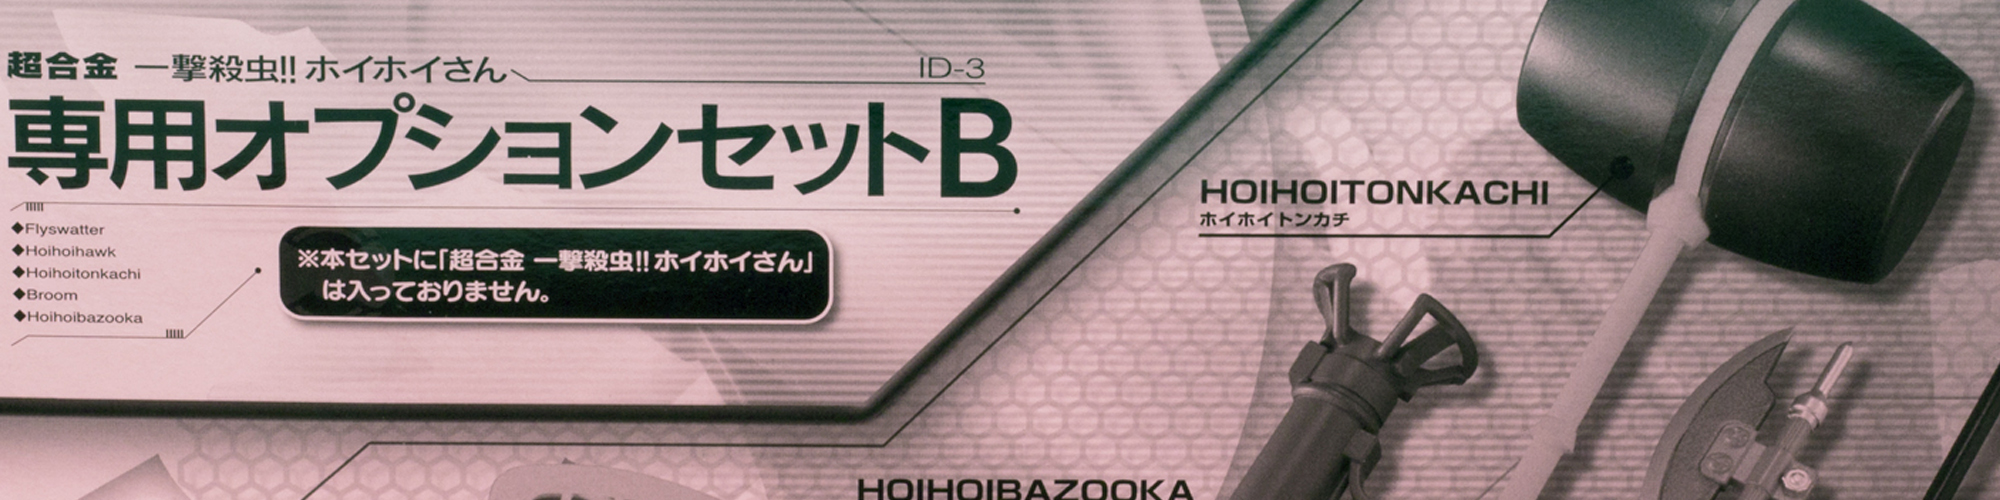 HOIHOI-SAN SENYOU OPTION SET B [by BANDAI]